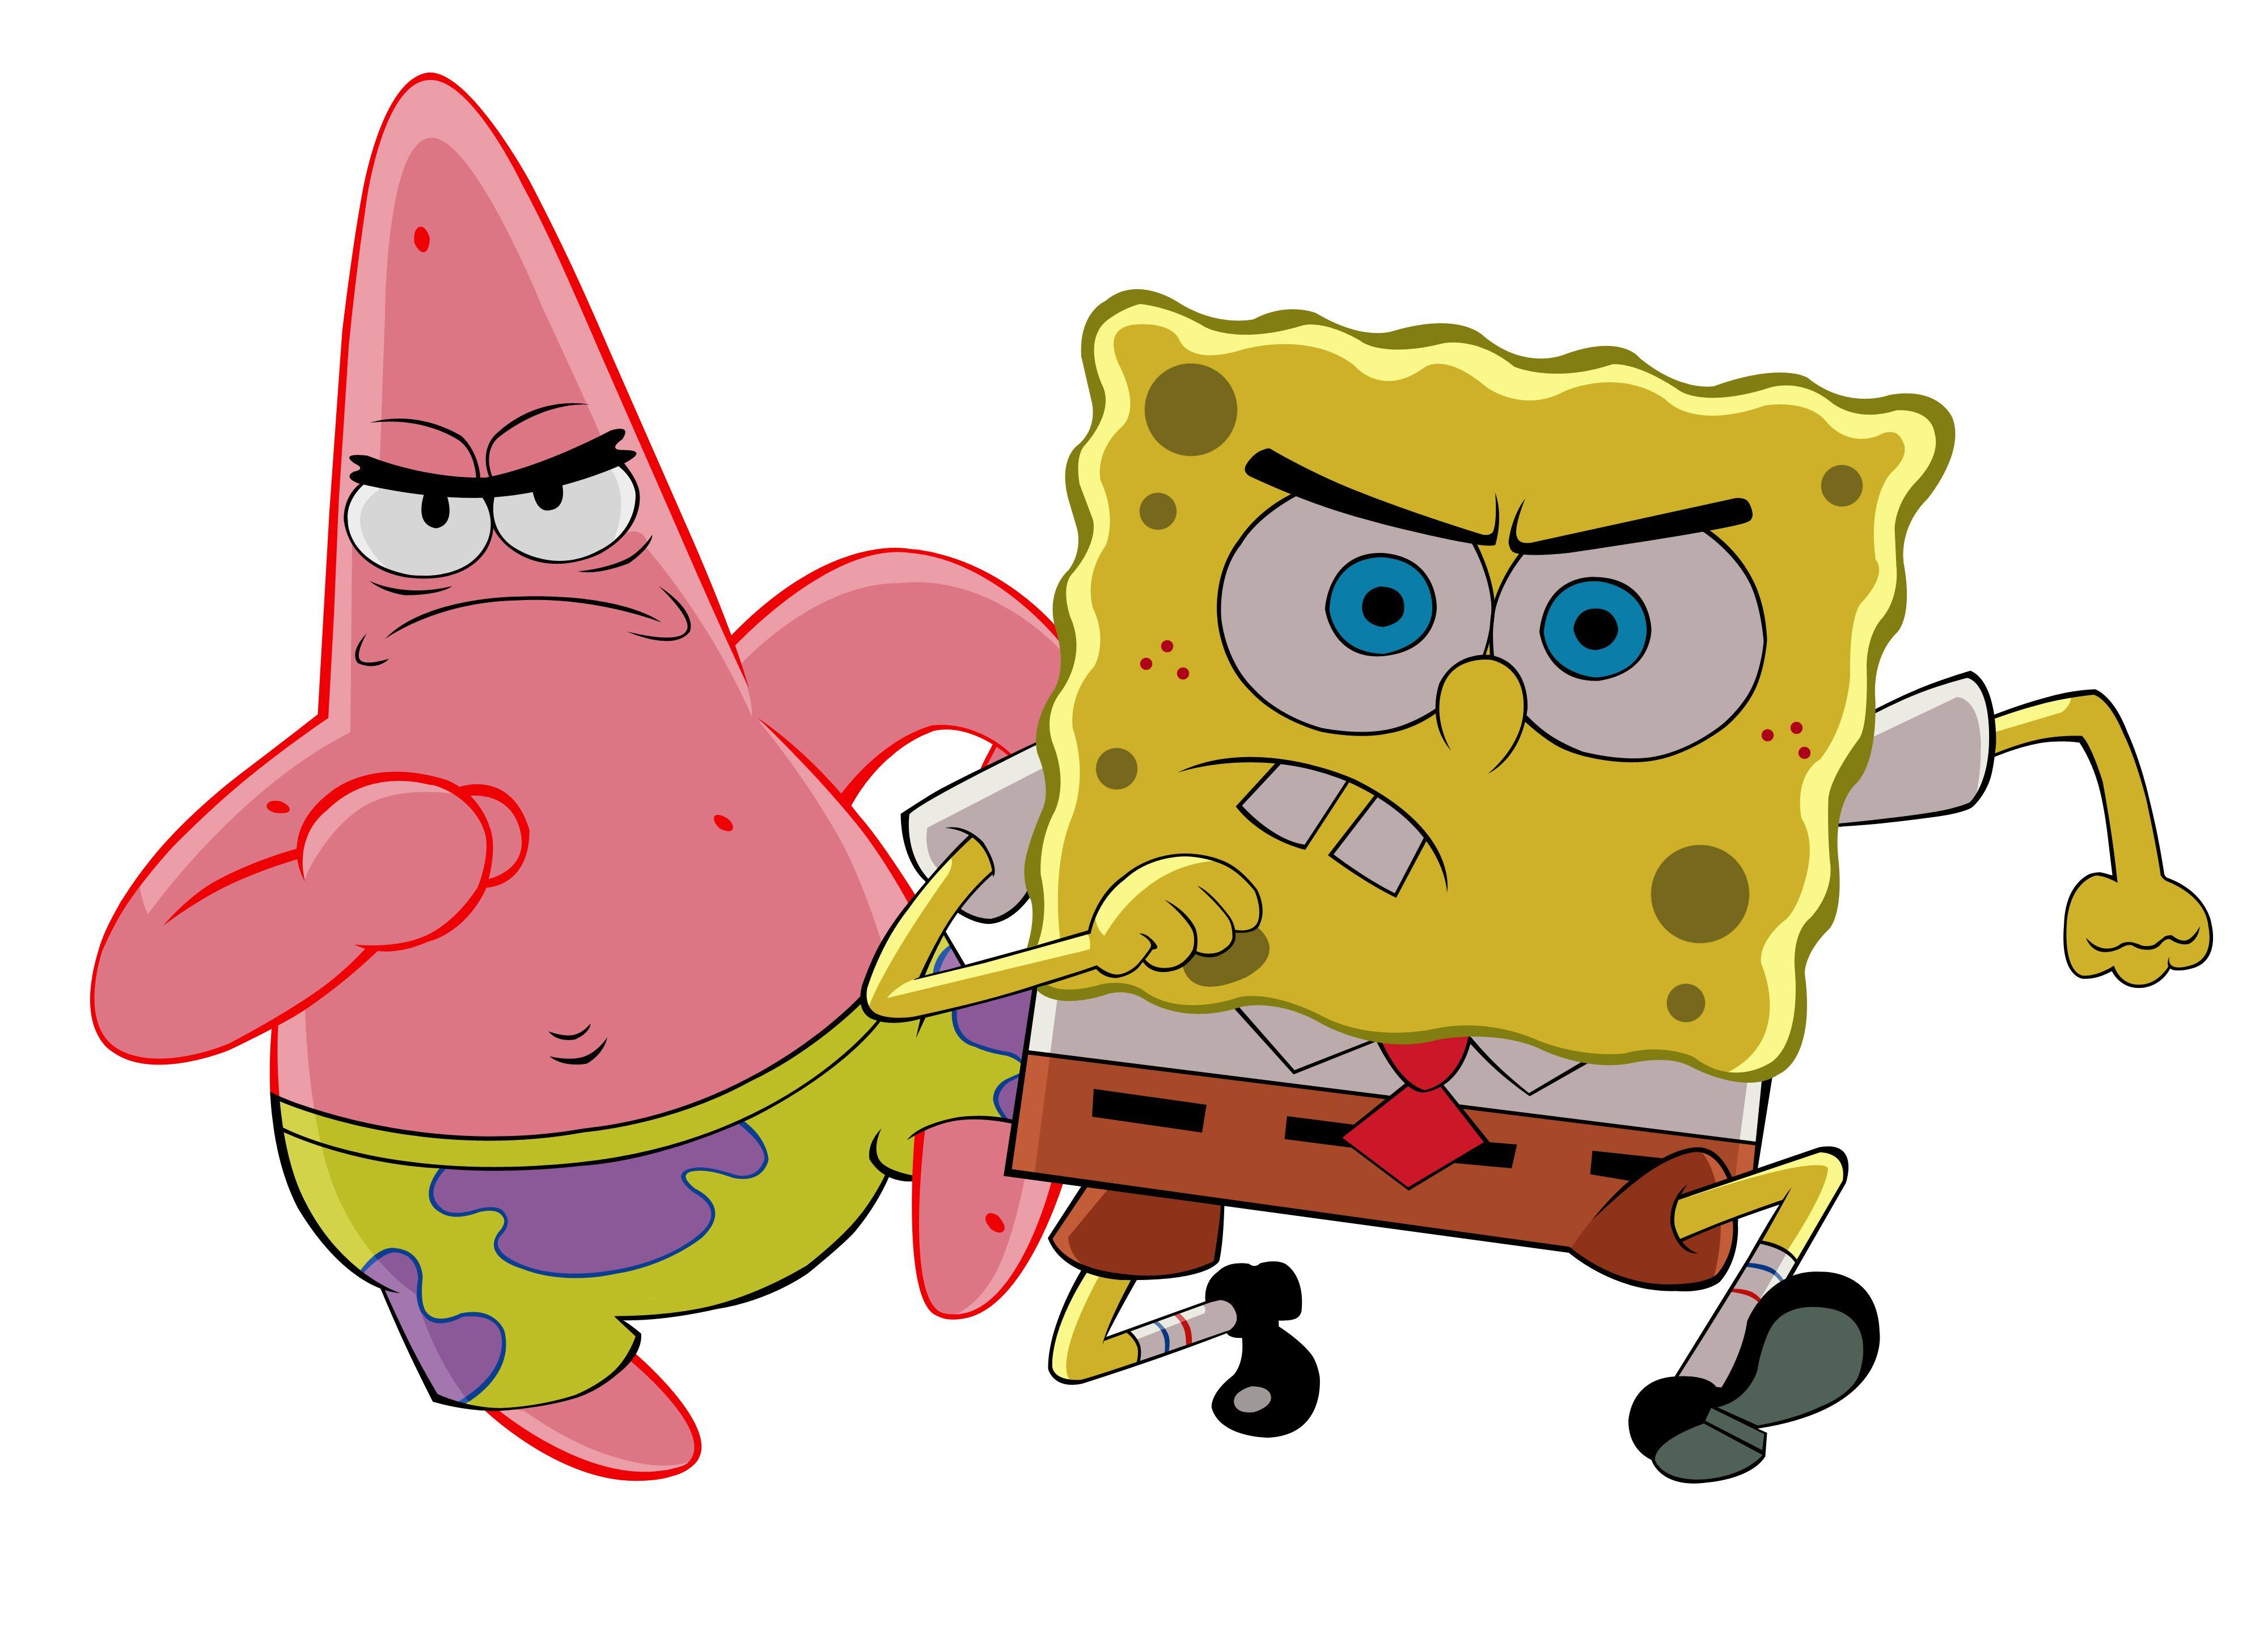 Secrets Picture Of Patrick And Spongebob Star Image HD Wallpaper